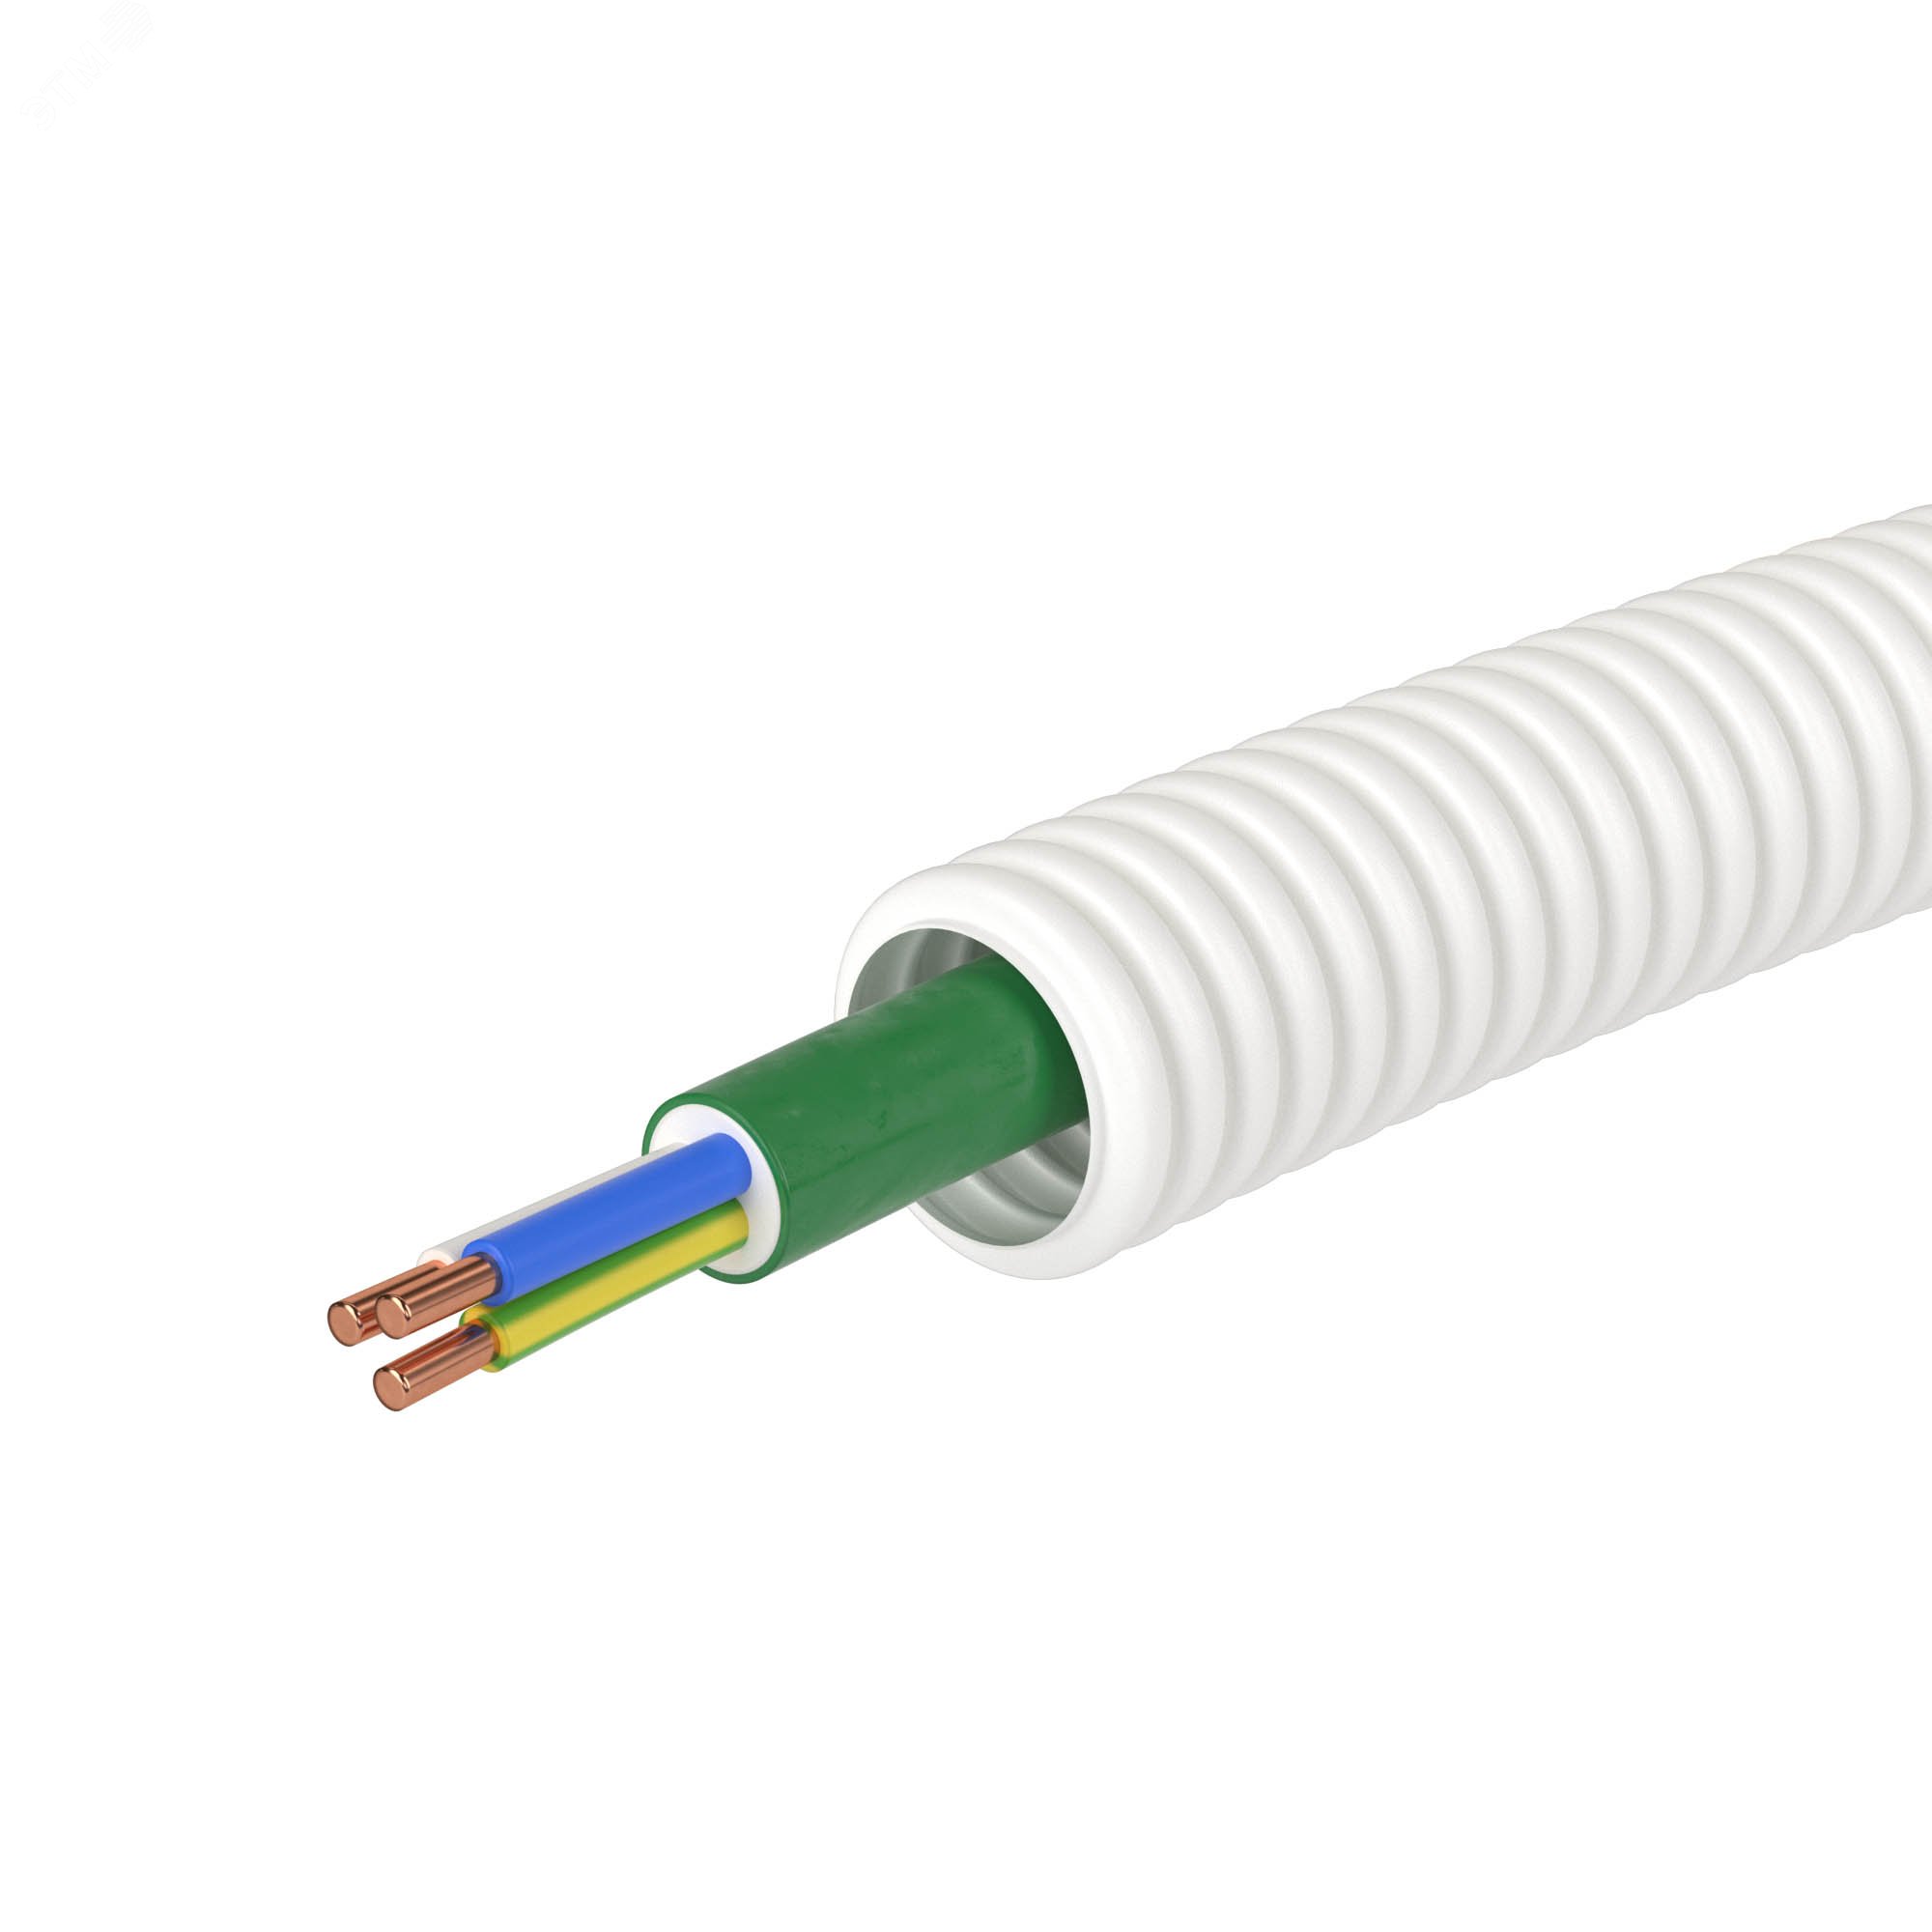 Электротруба ПЛЛ гибкая гофр. не содержит галогенов д.25мм цвет белый с кабелем ППГнг(А)-FRHF 3x2,5мм РЭК ГОСТ+, 50м 8S82550FRHF DKC - превью 4